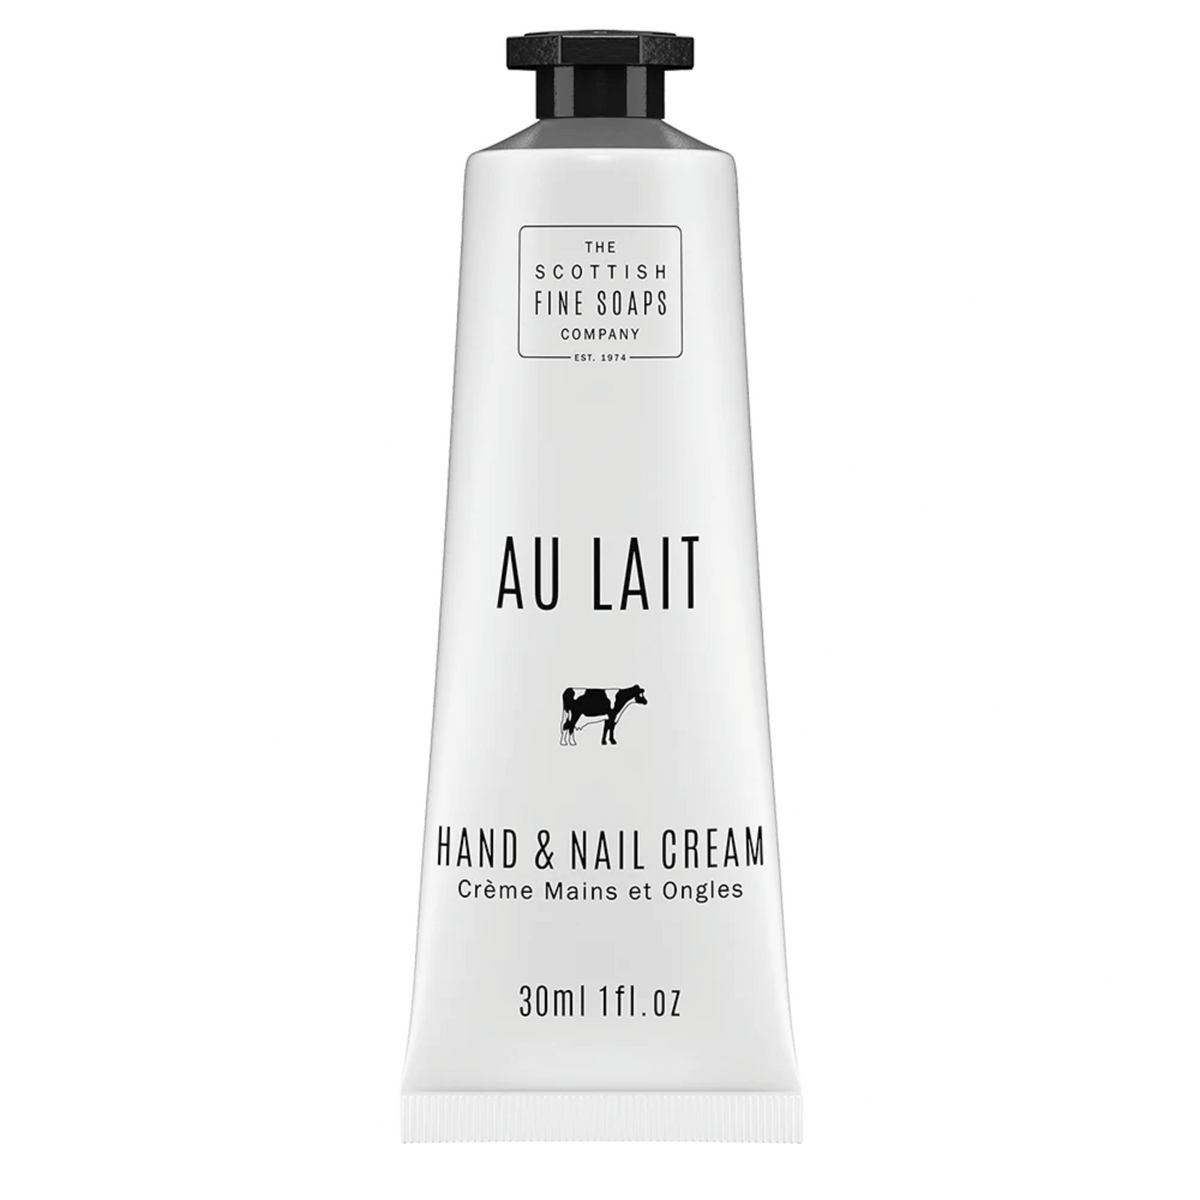 Primary Image of Au Lait Hand & Nail Cream